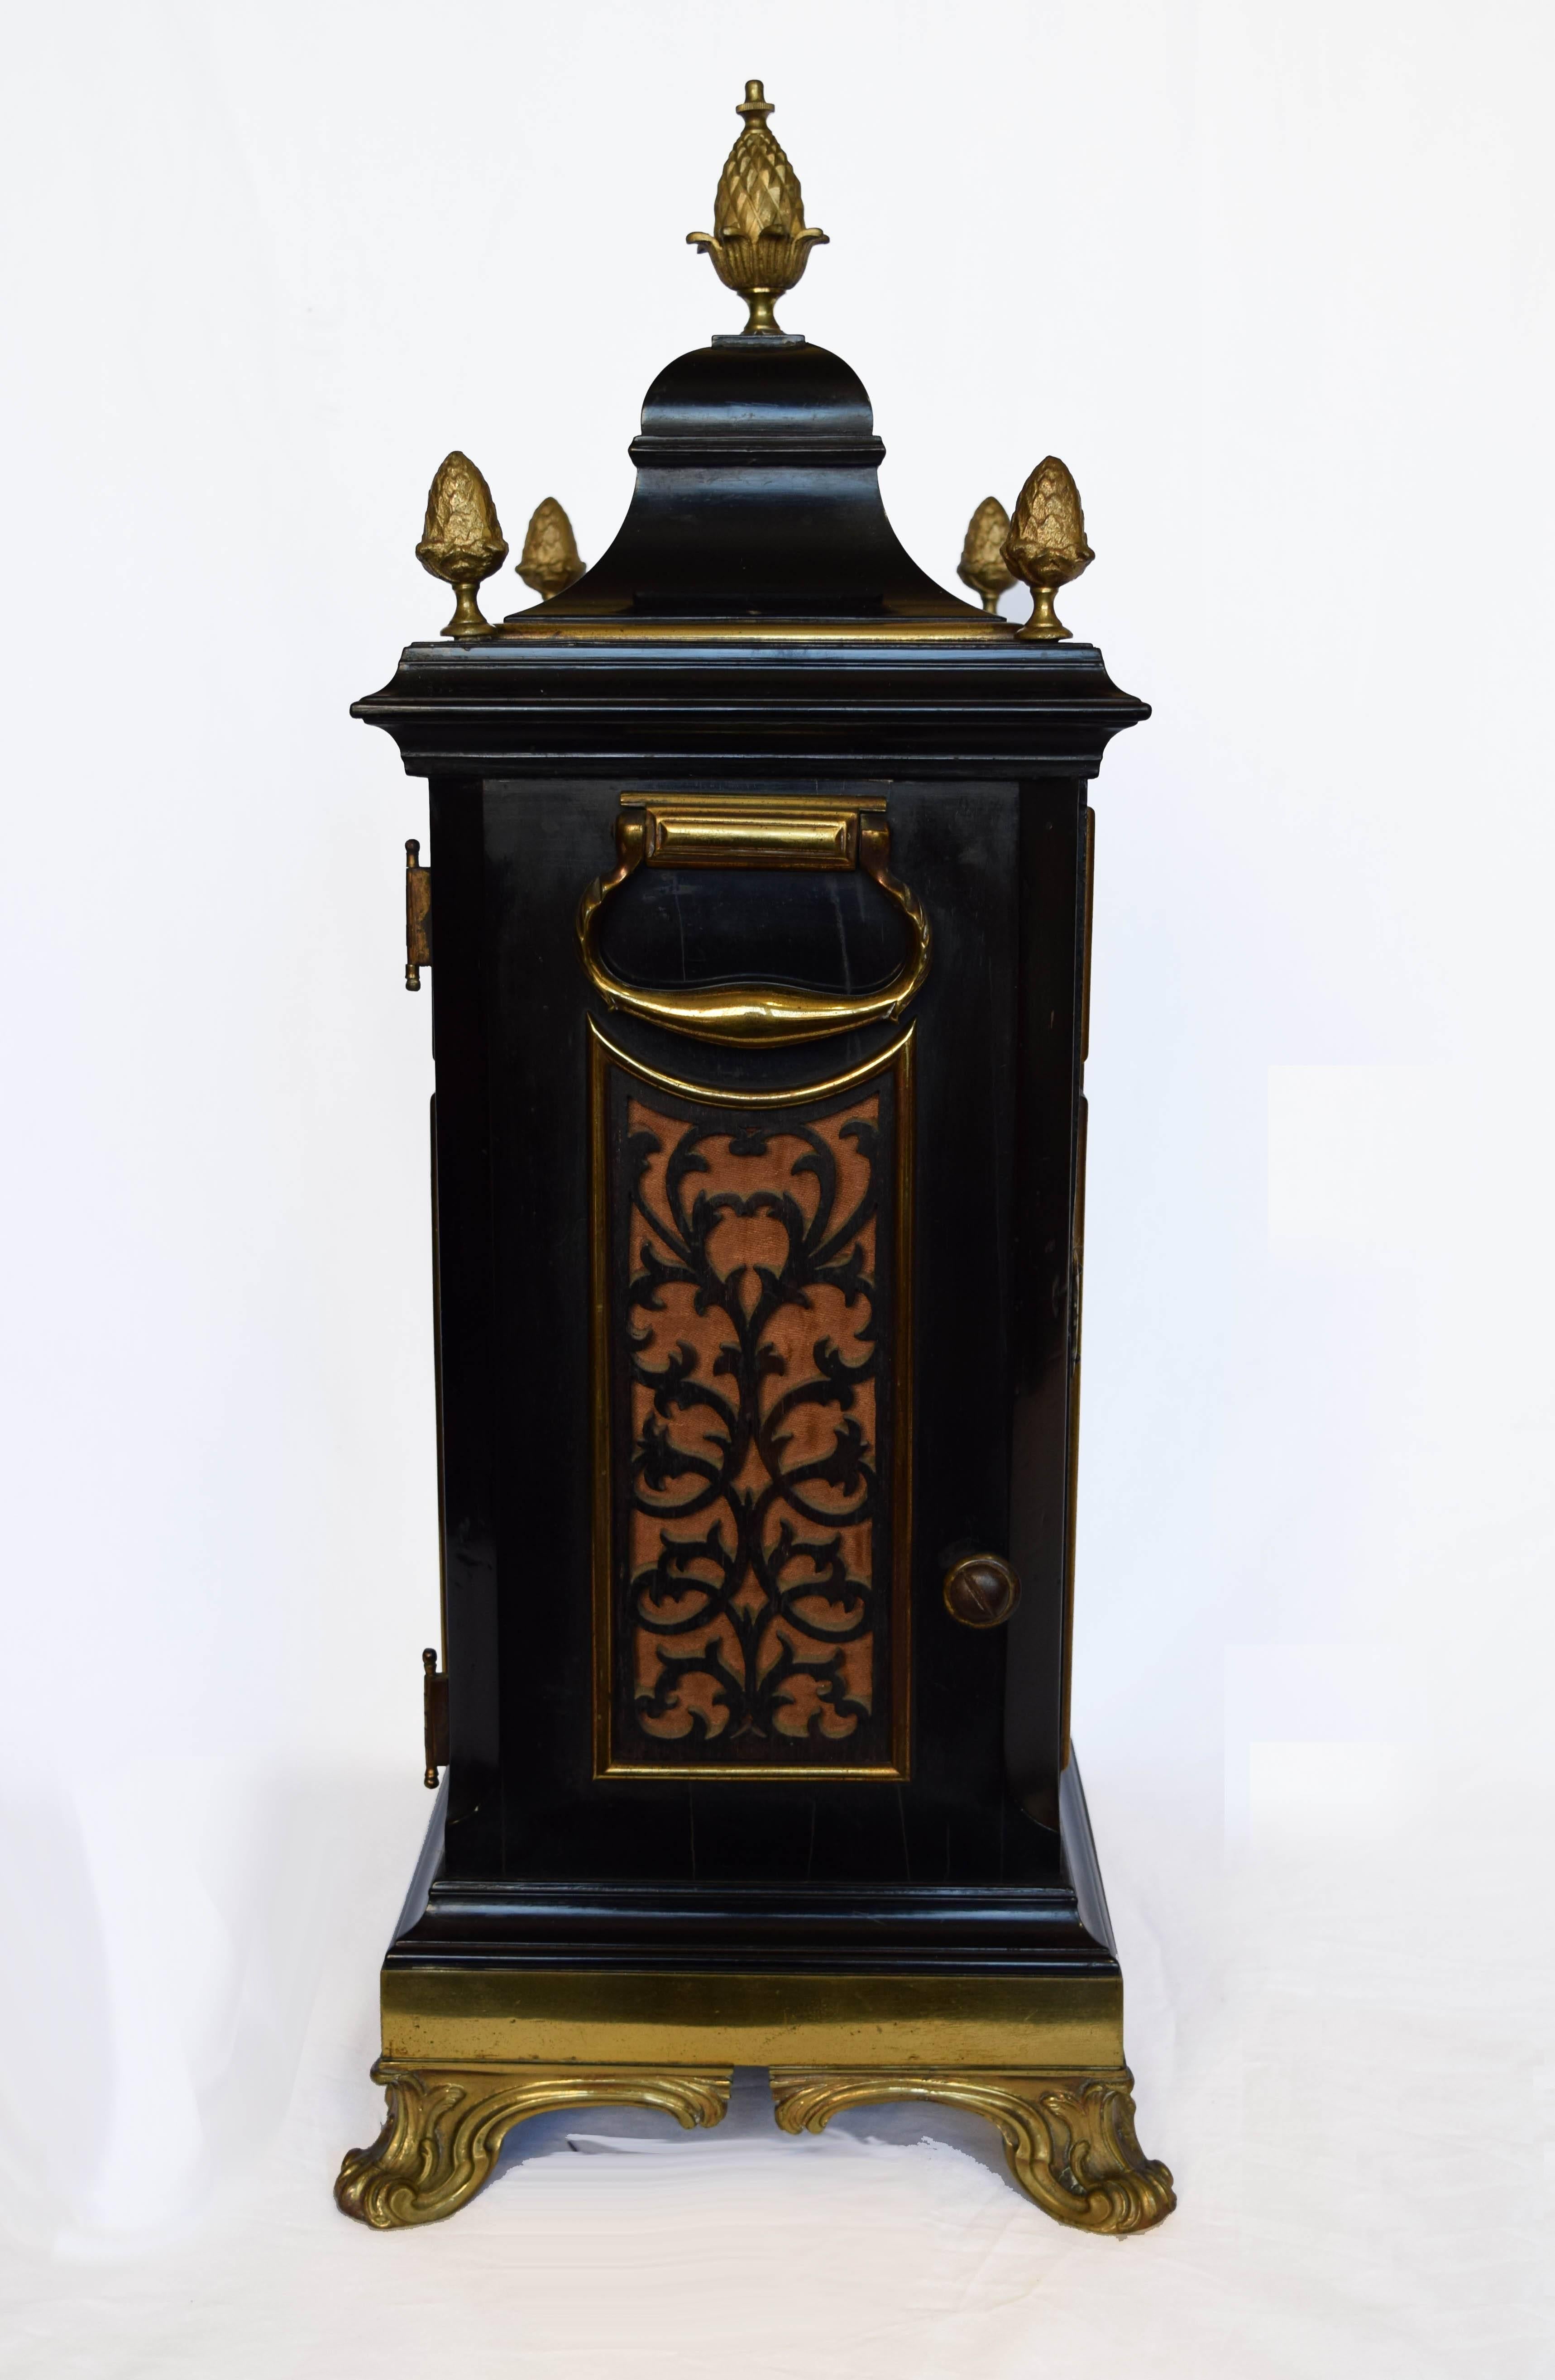 English George III Gilt Brass-Mounted Ebonized Bracket Clock by John Ellicot For Sale